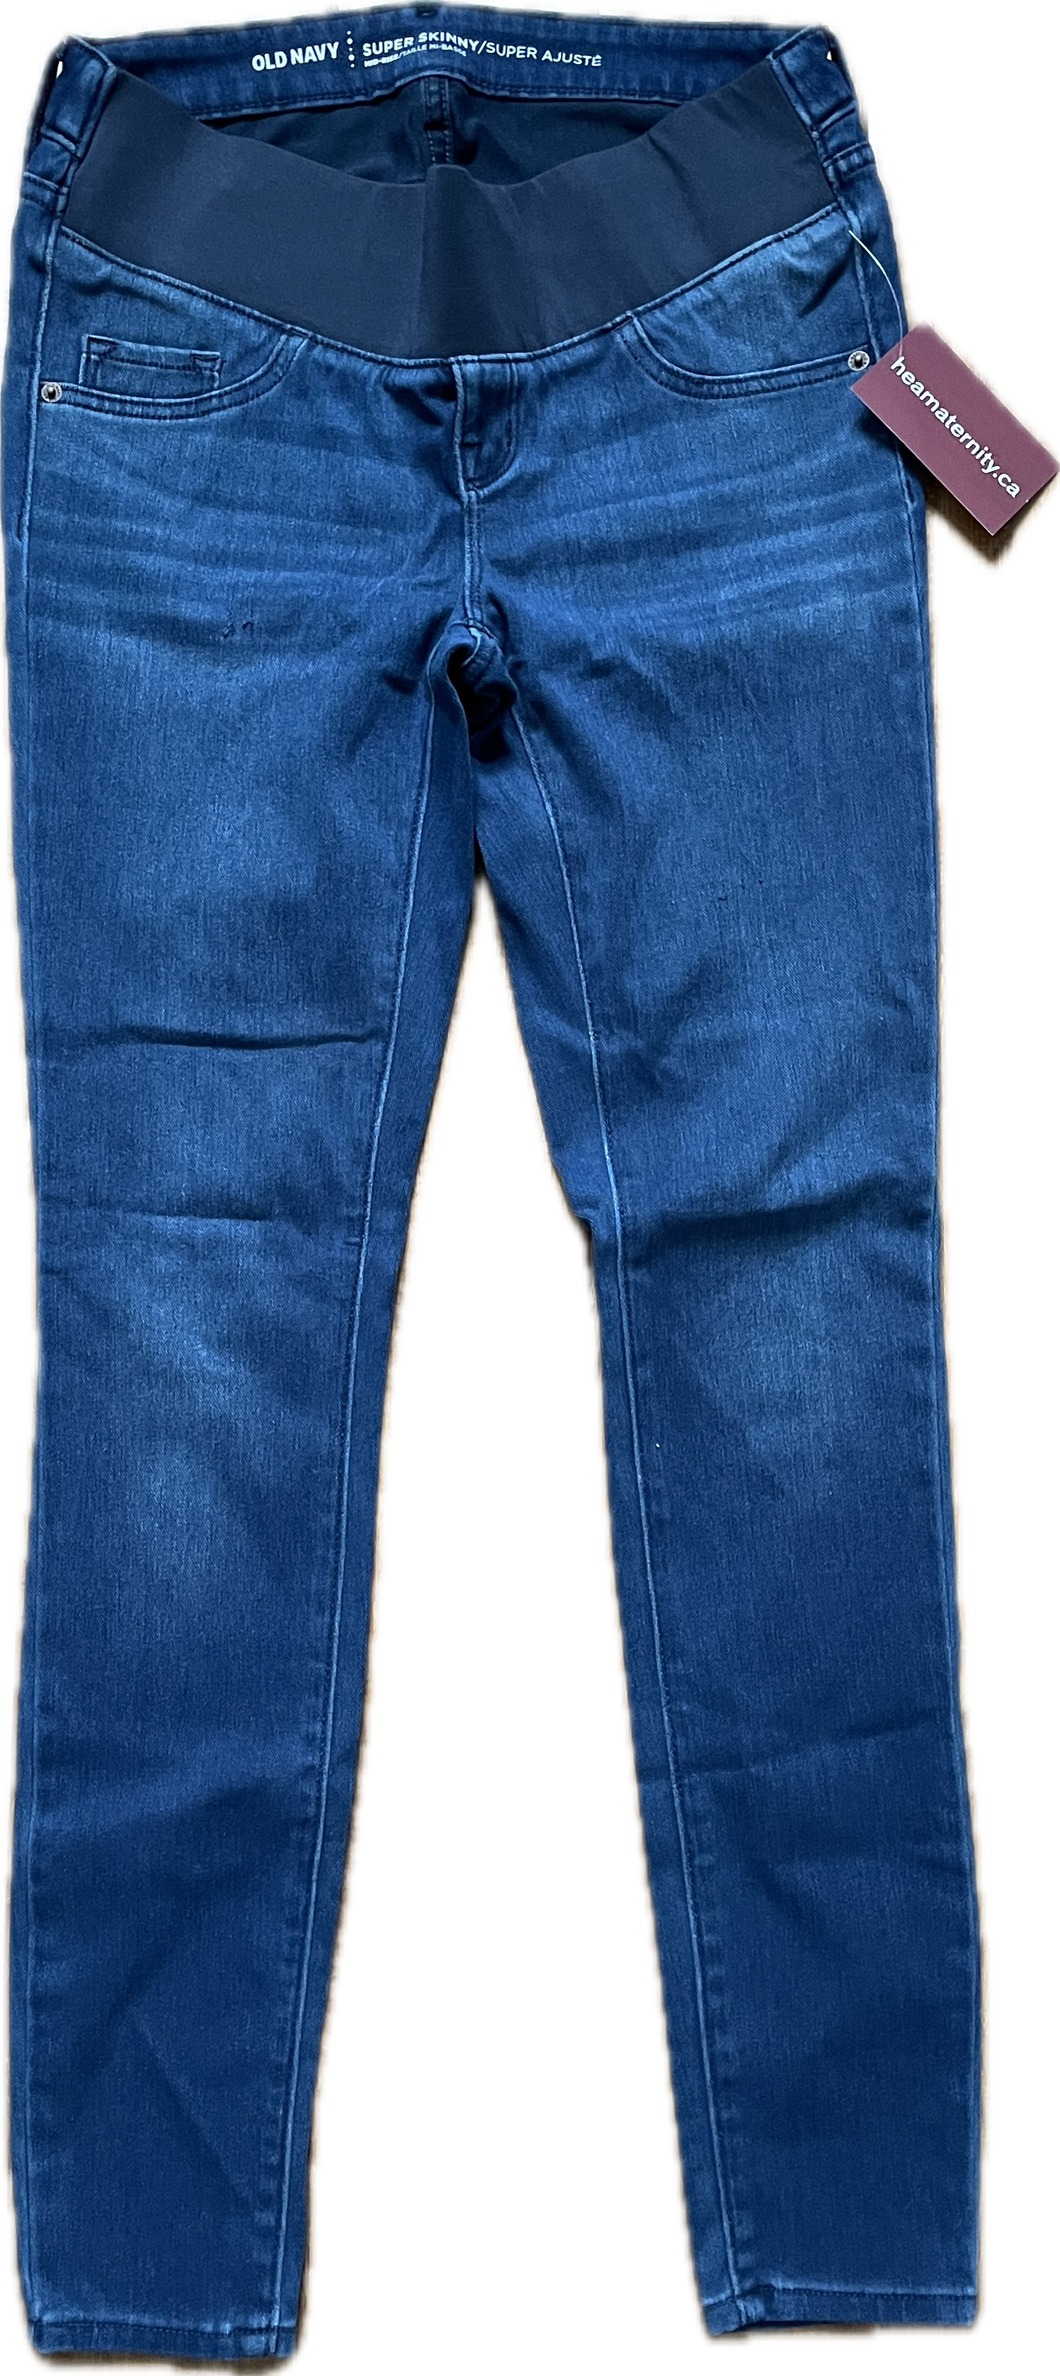 XS Old Navy Super Skinny Jeans Size 2